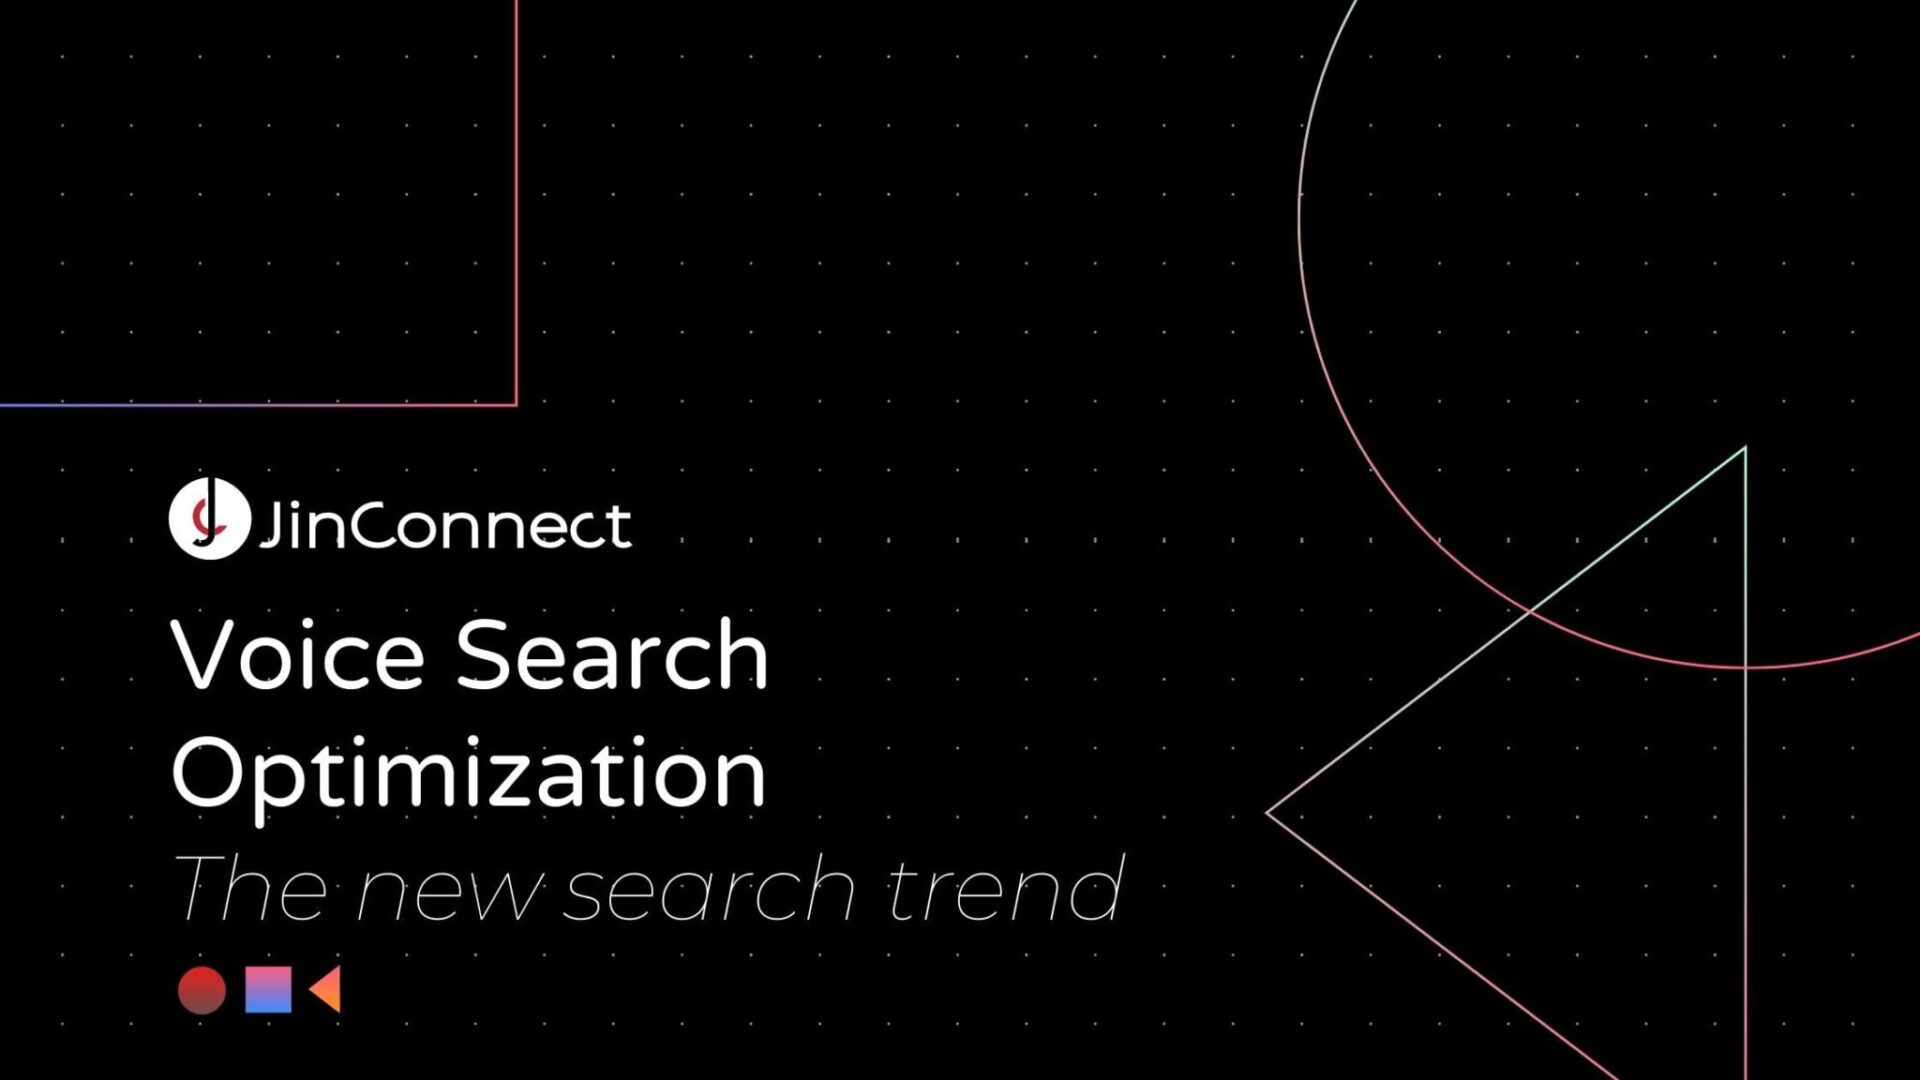 Voice Search Optimization trend in SEO